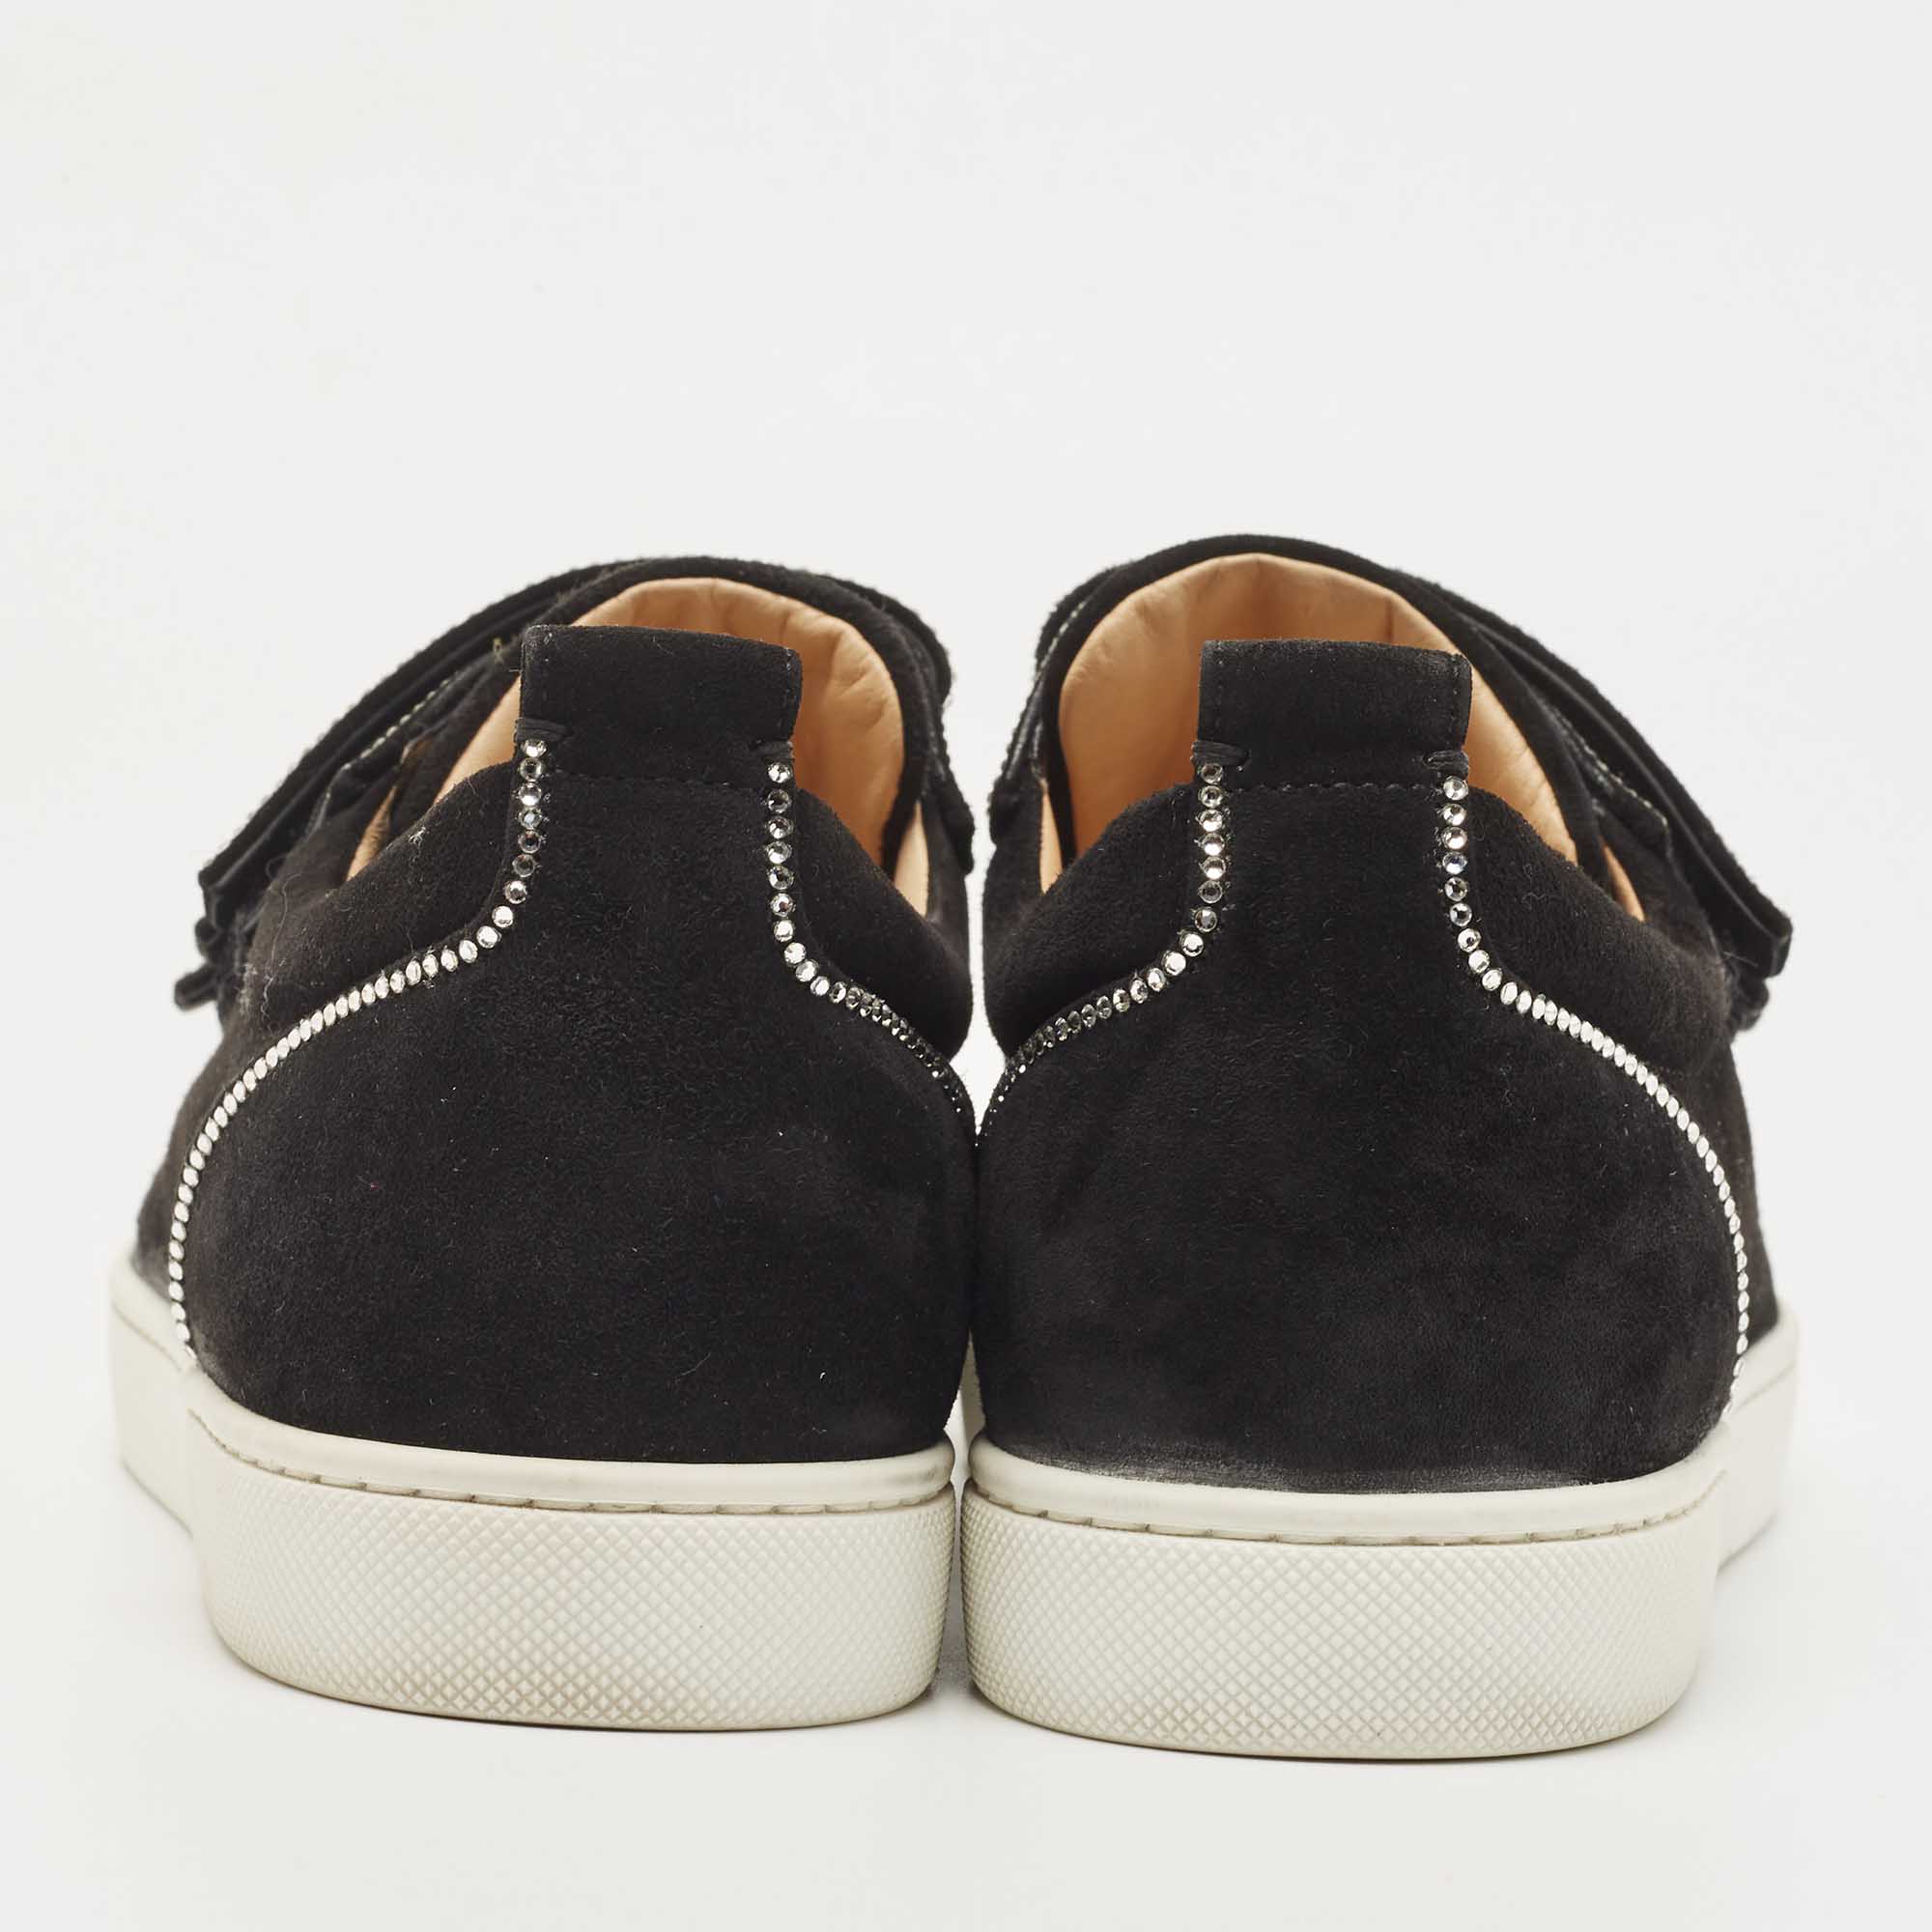 Christian Louboutin Black Suede Kiddo Bordo Embellished Velcro Low Top Sneakers Size 38.5